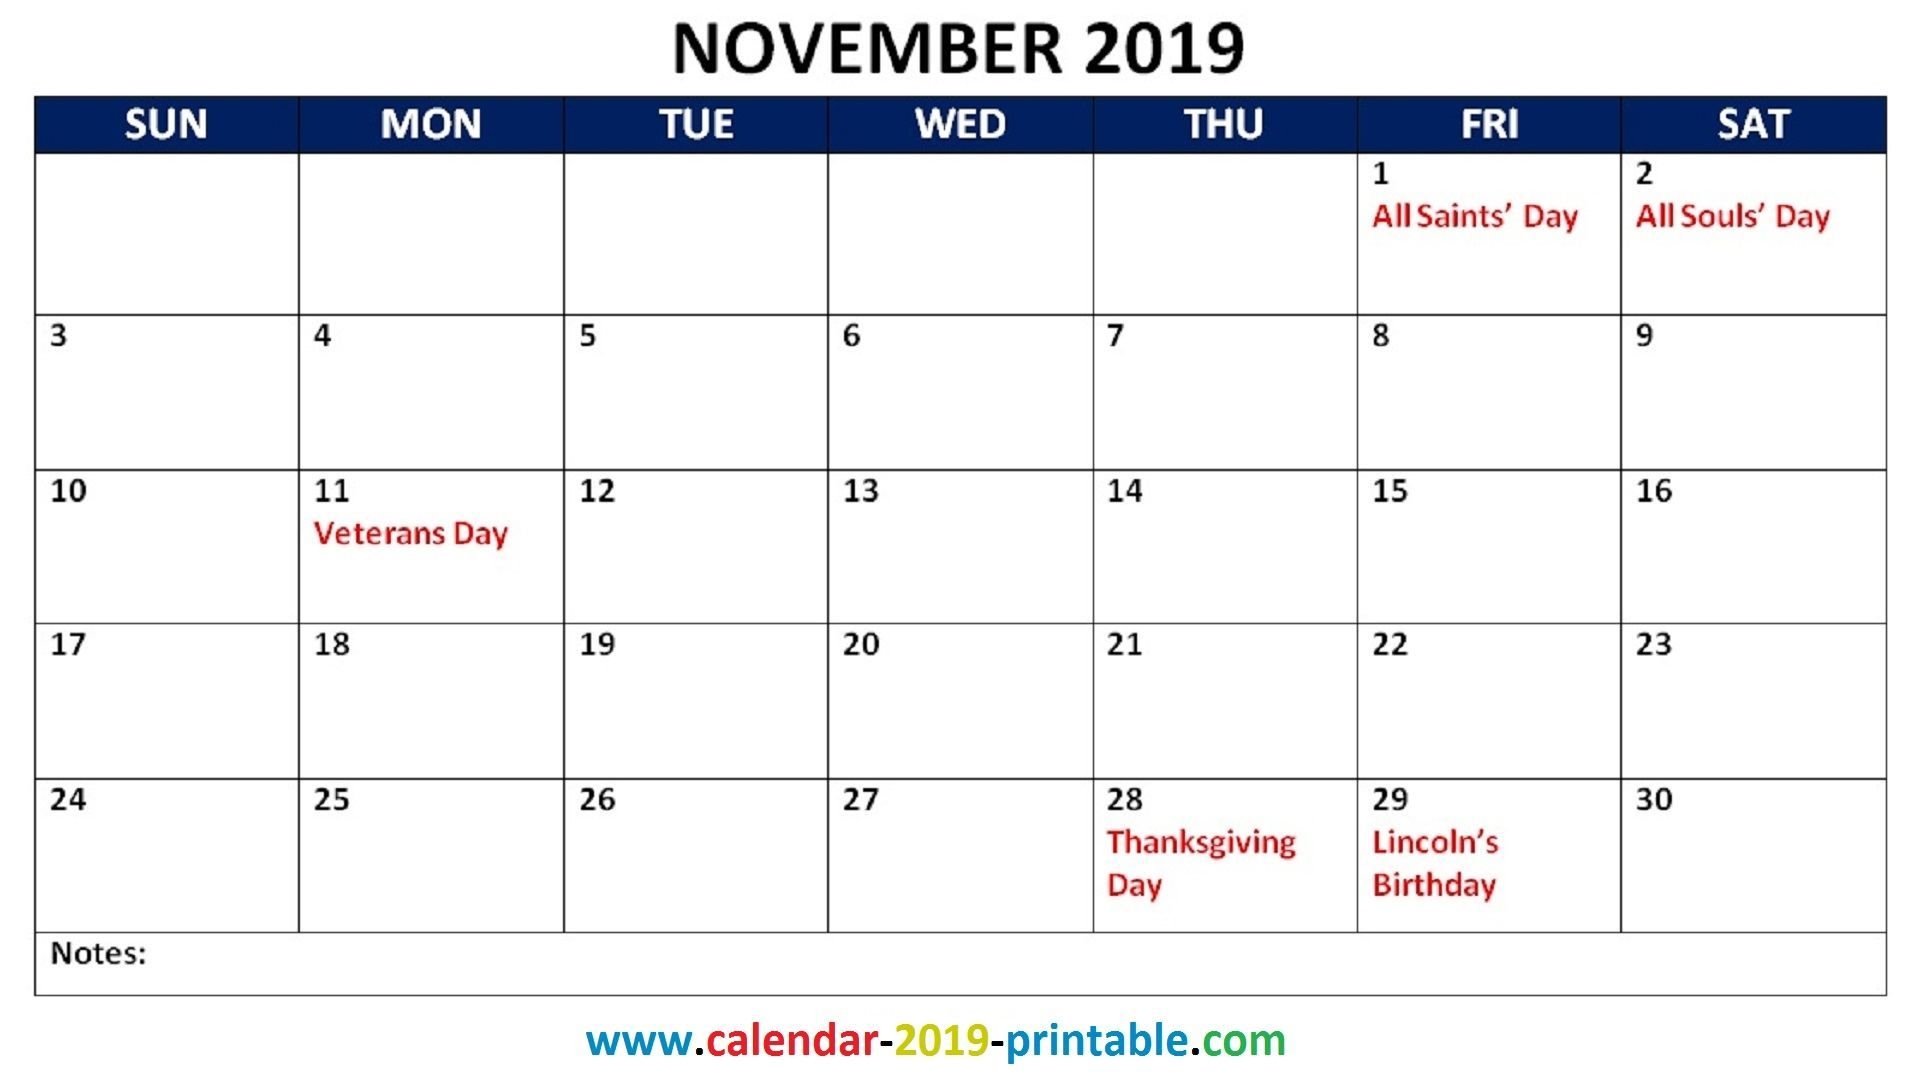 November 2019 Calendar With Holidays 2019 Calendars Pinterest